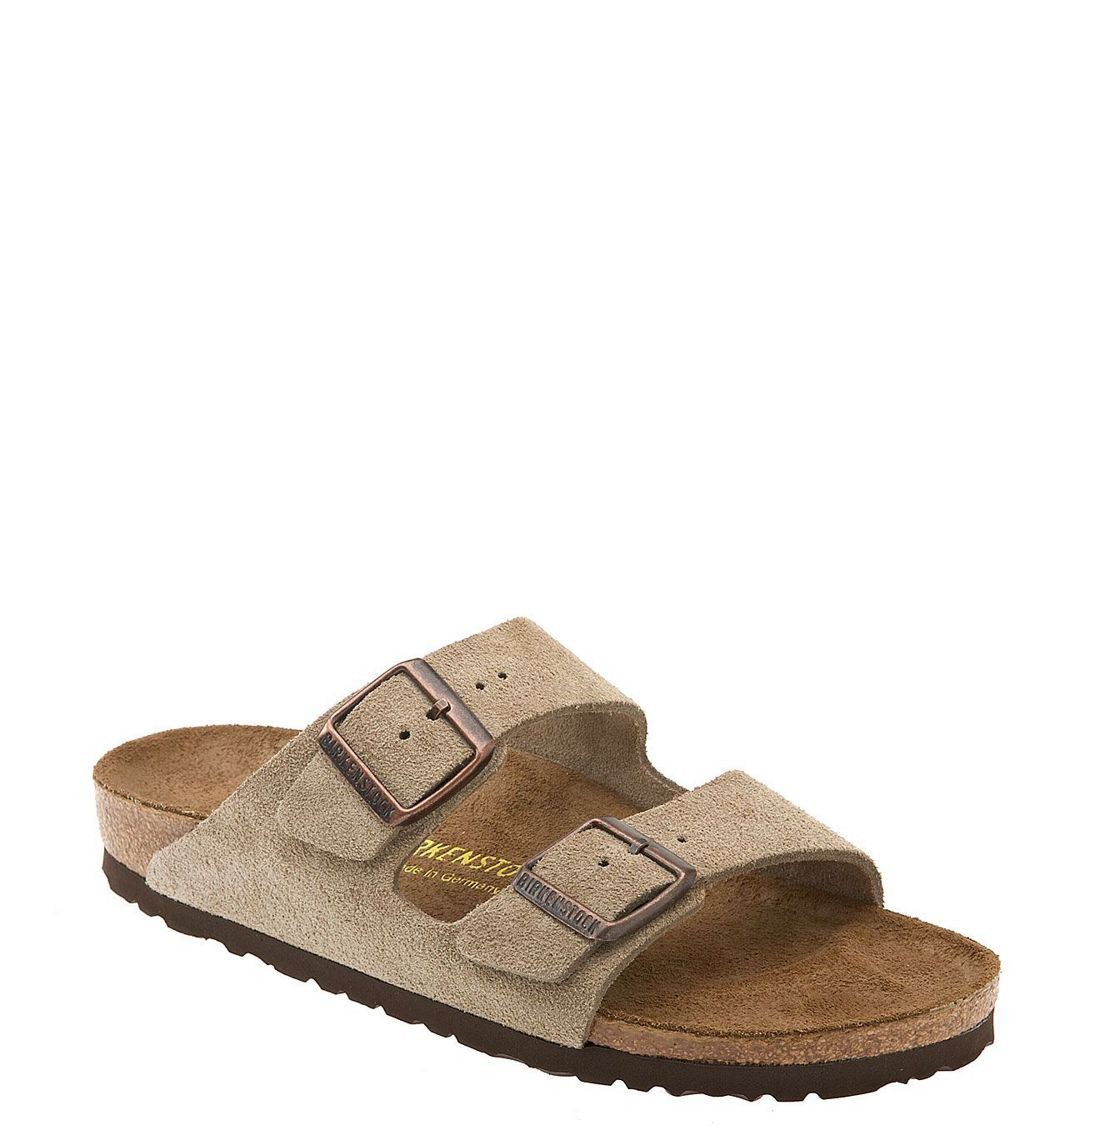 Birkenstock 'Arizona' Sandal in Brown (taupe suede) | Lyst